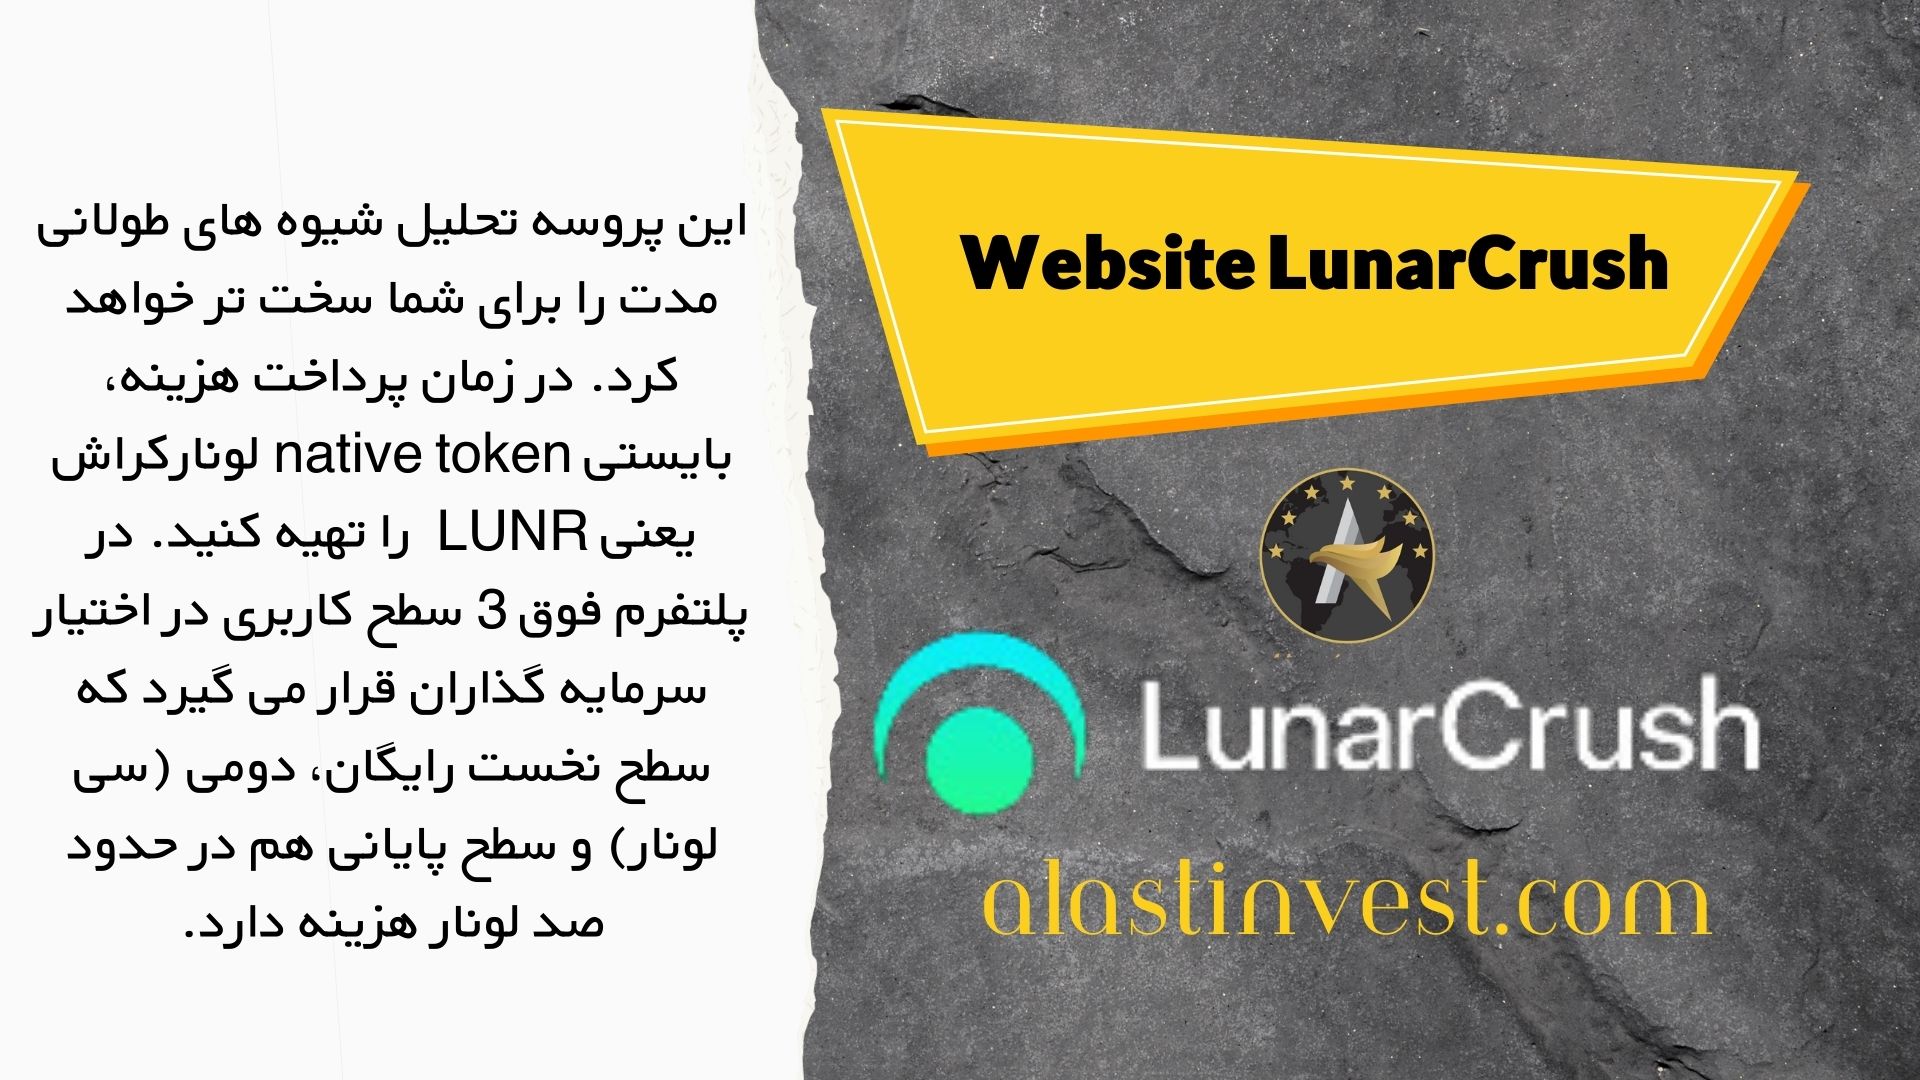 Website LunarCrush: